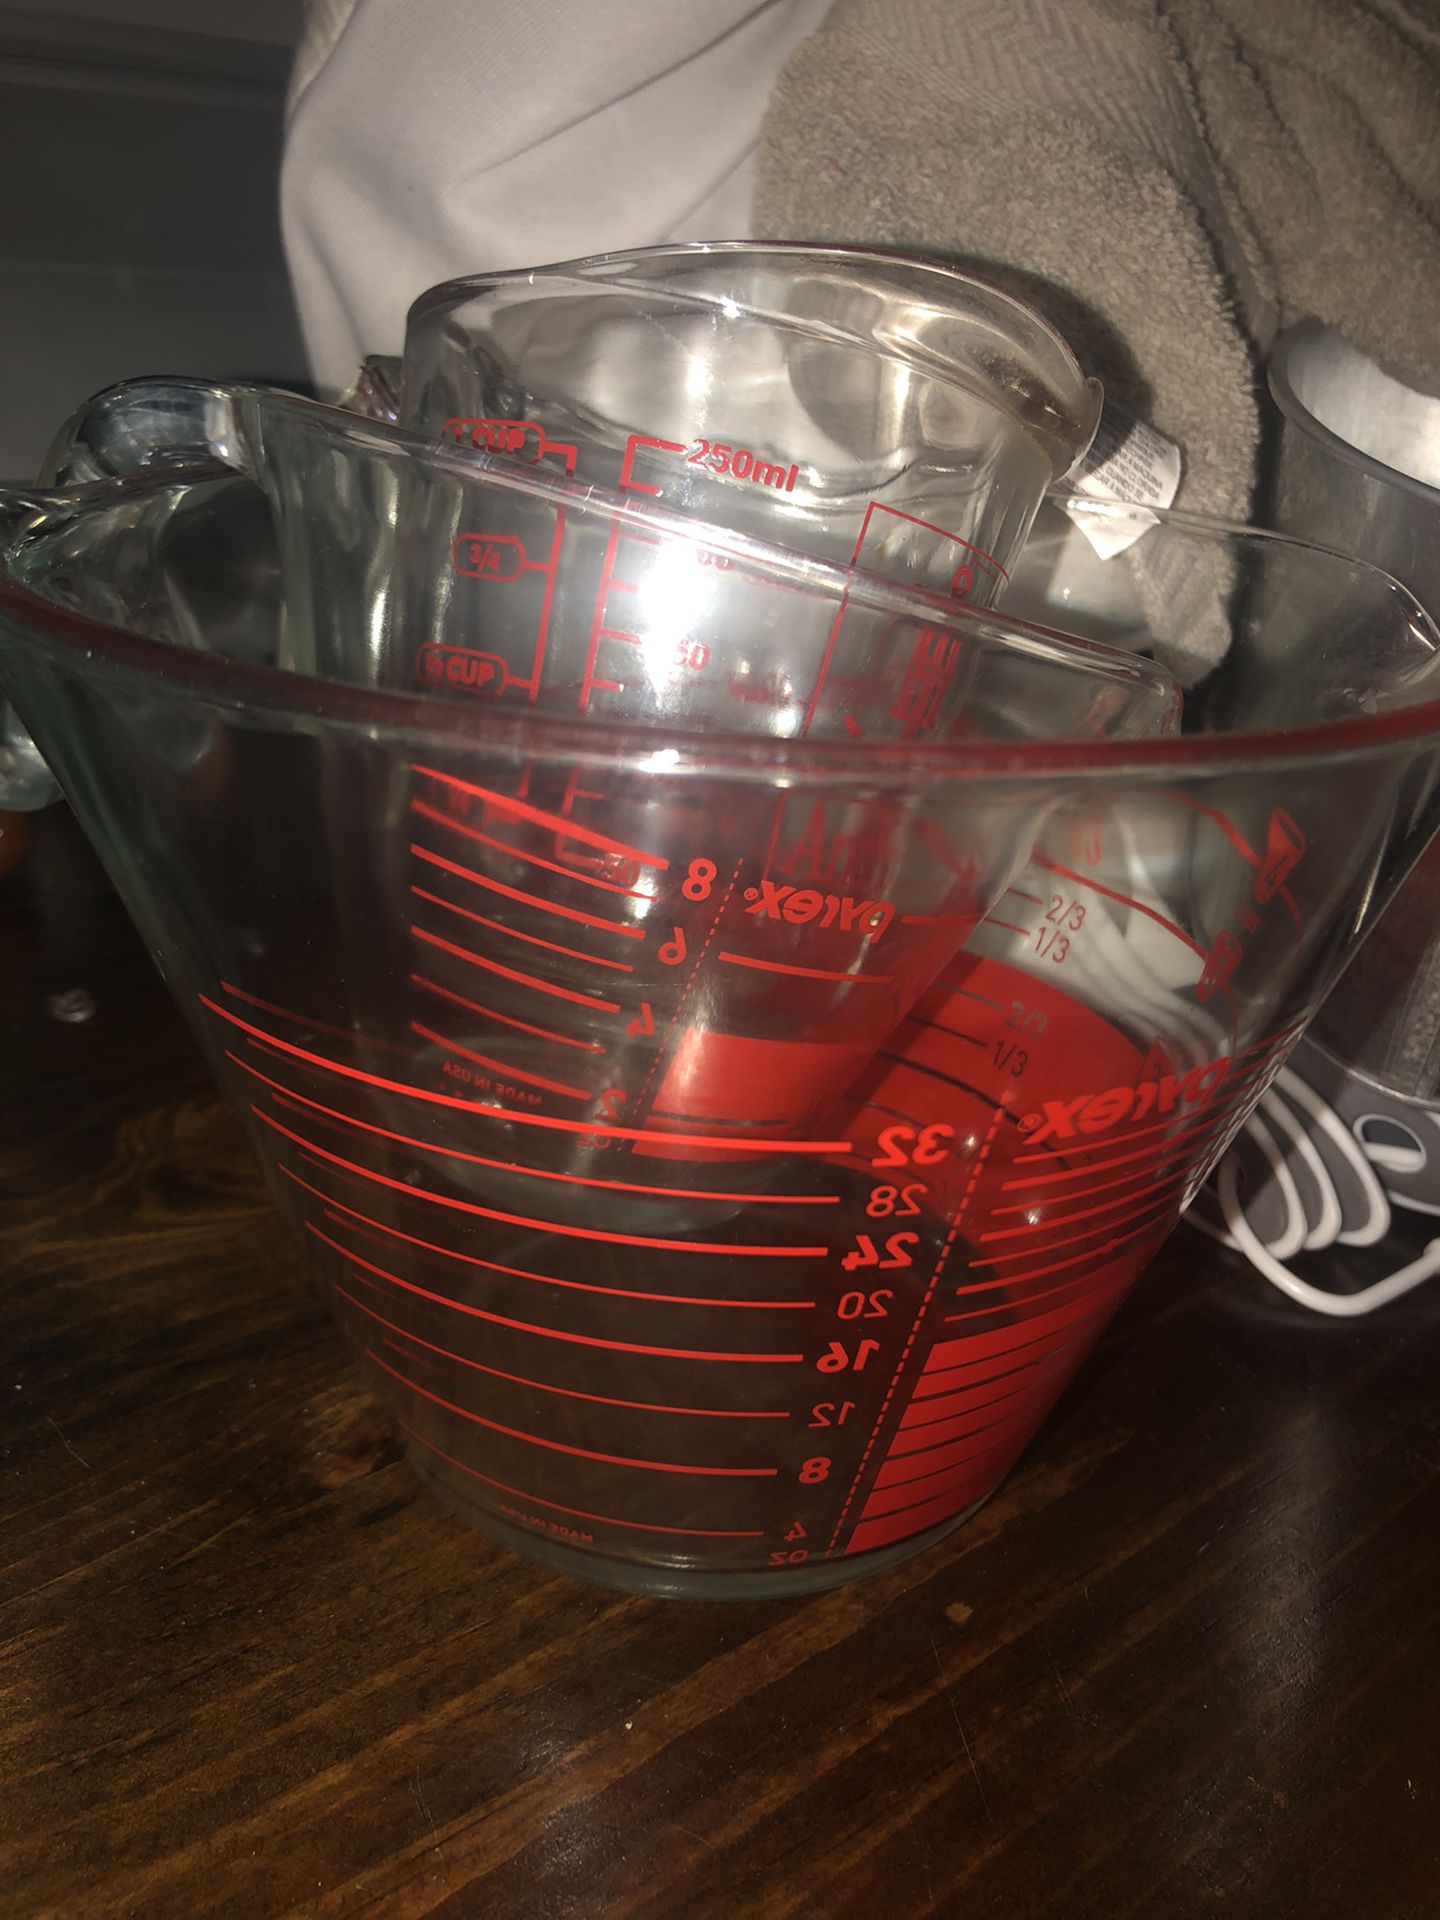 Pyrex measuring cups (set of 3)